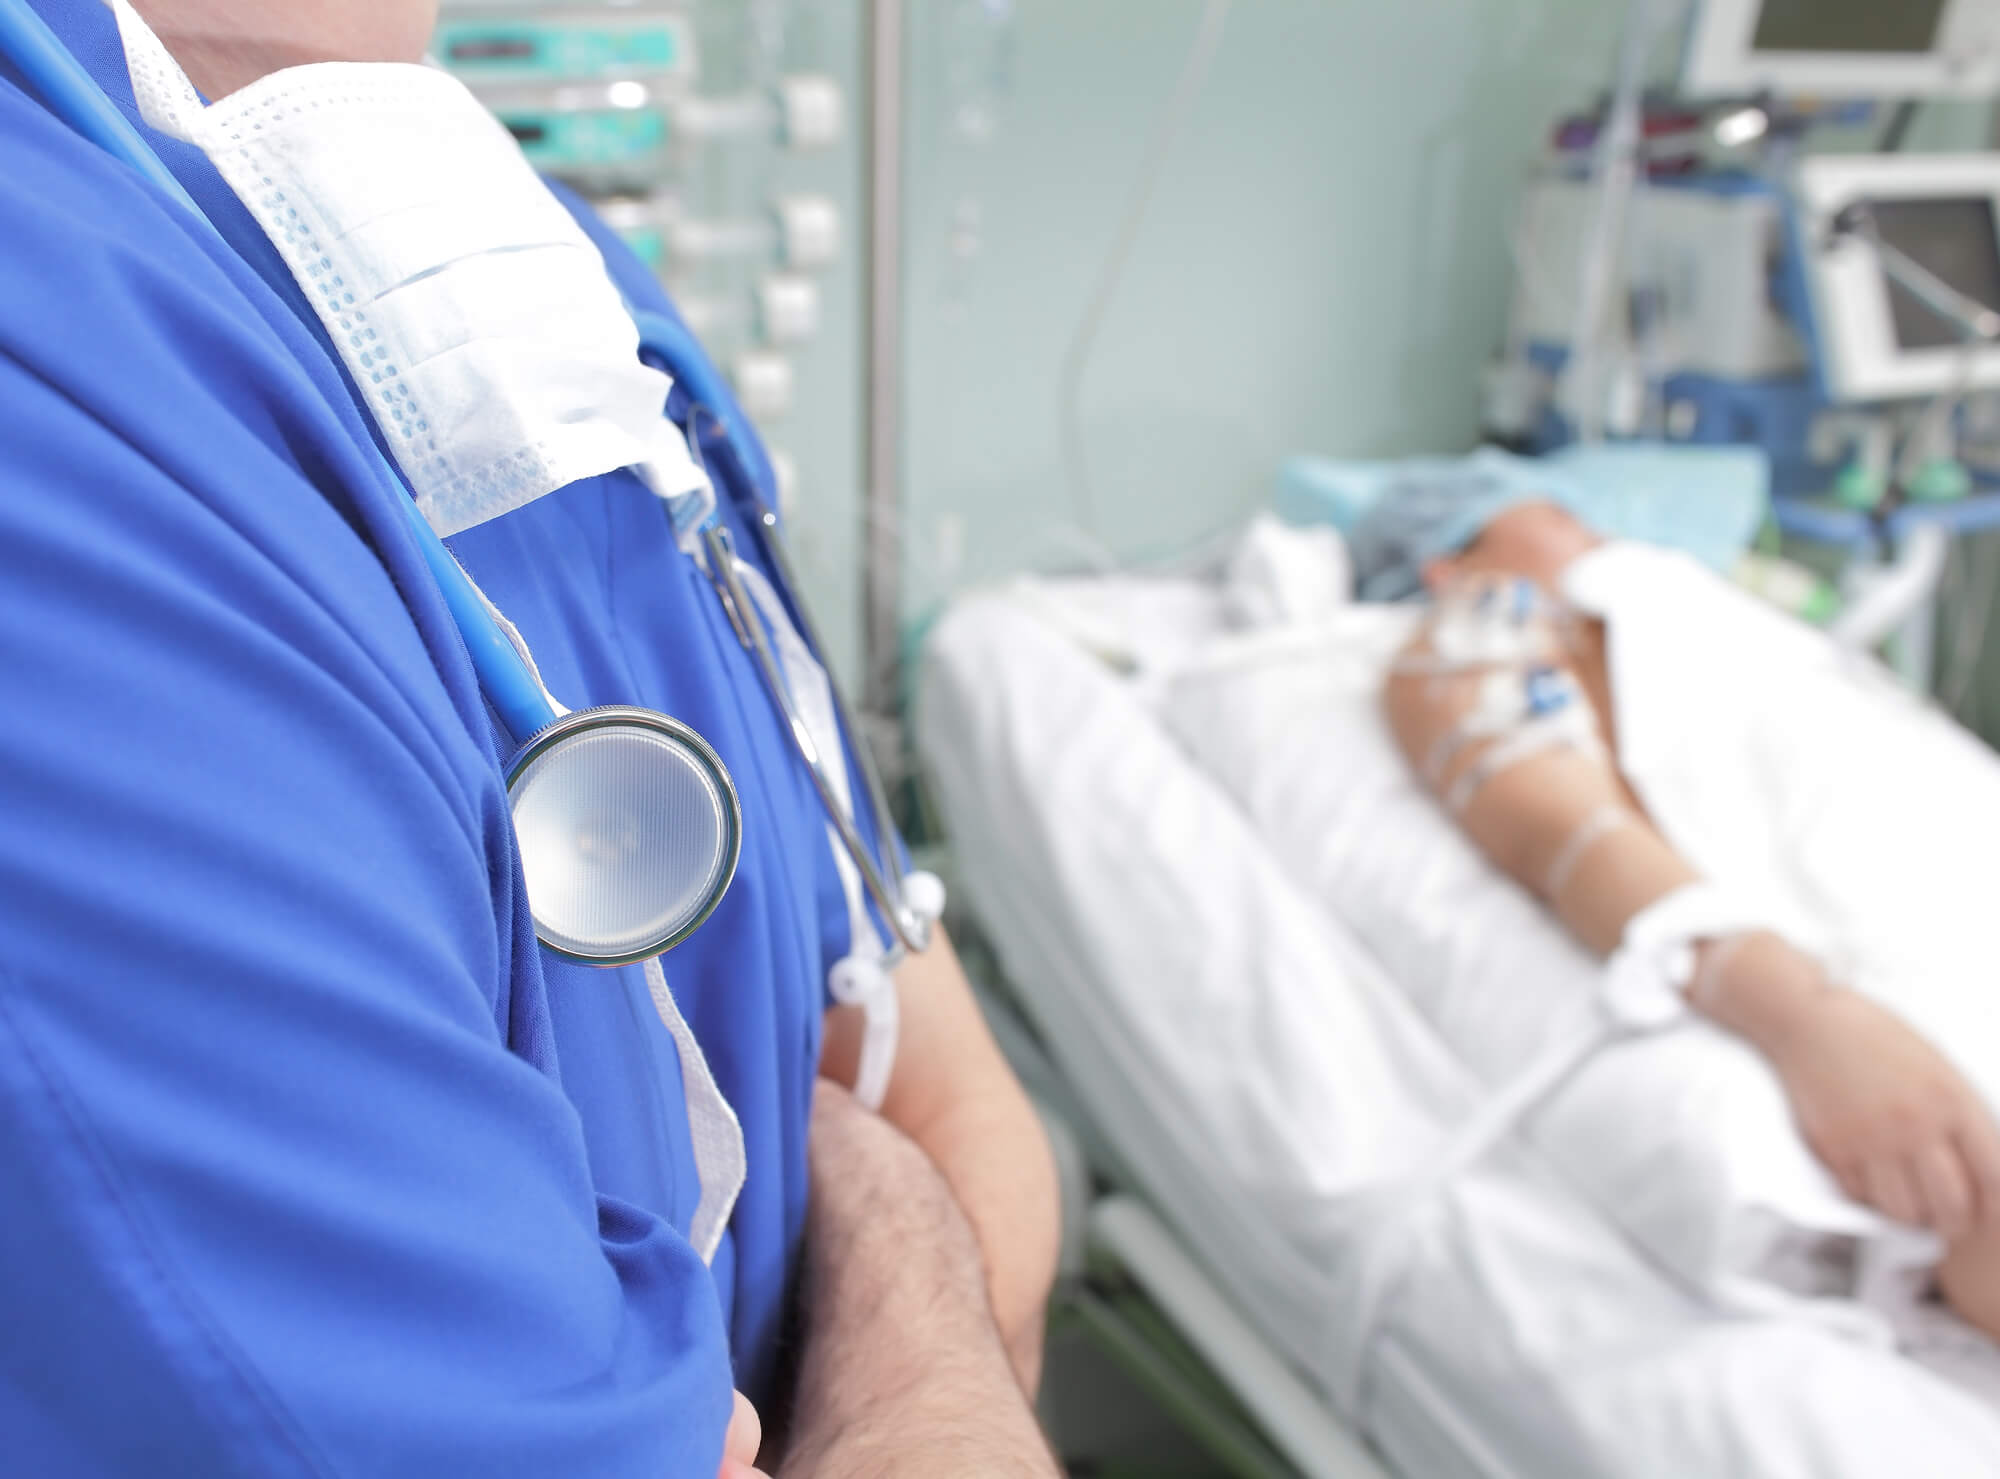 Healthcare worker injuries